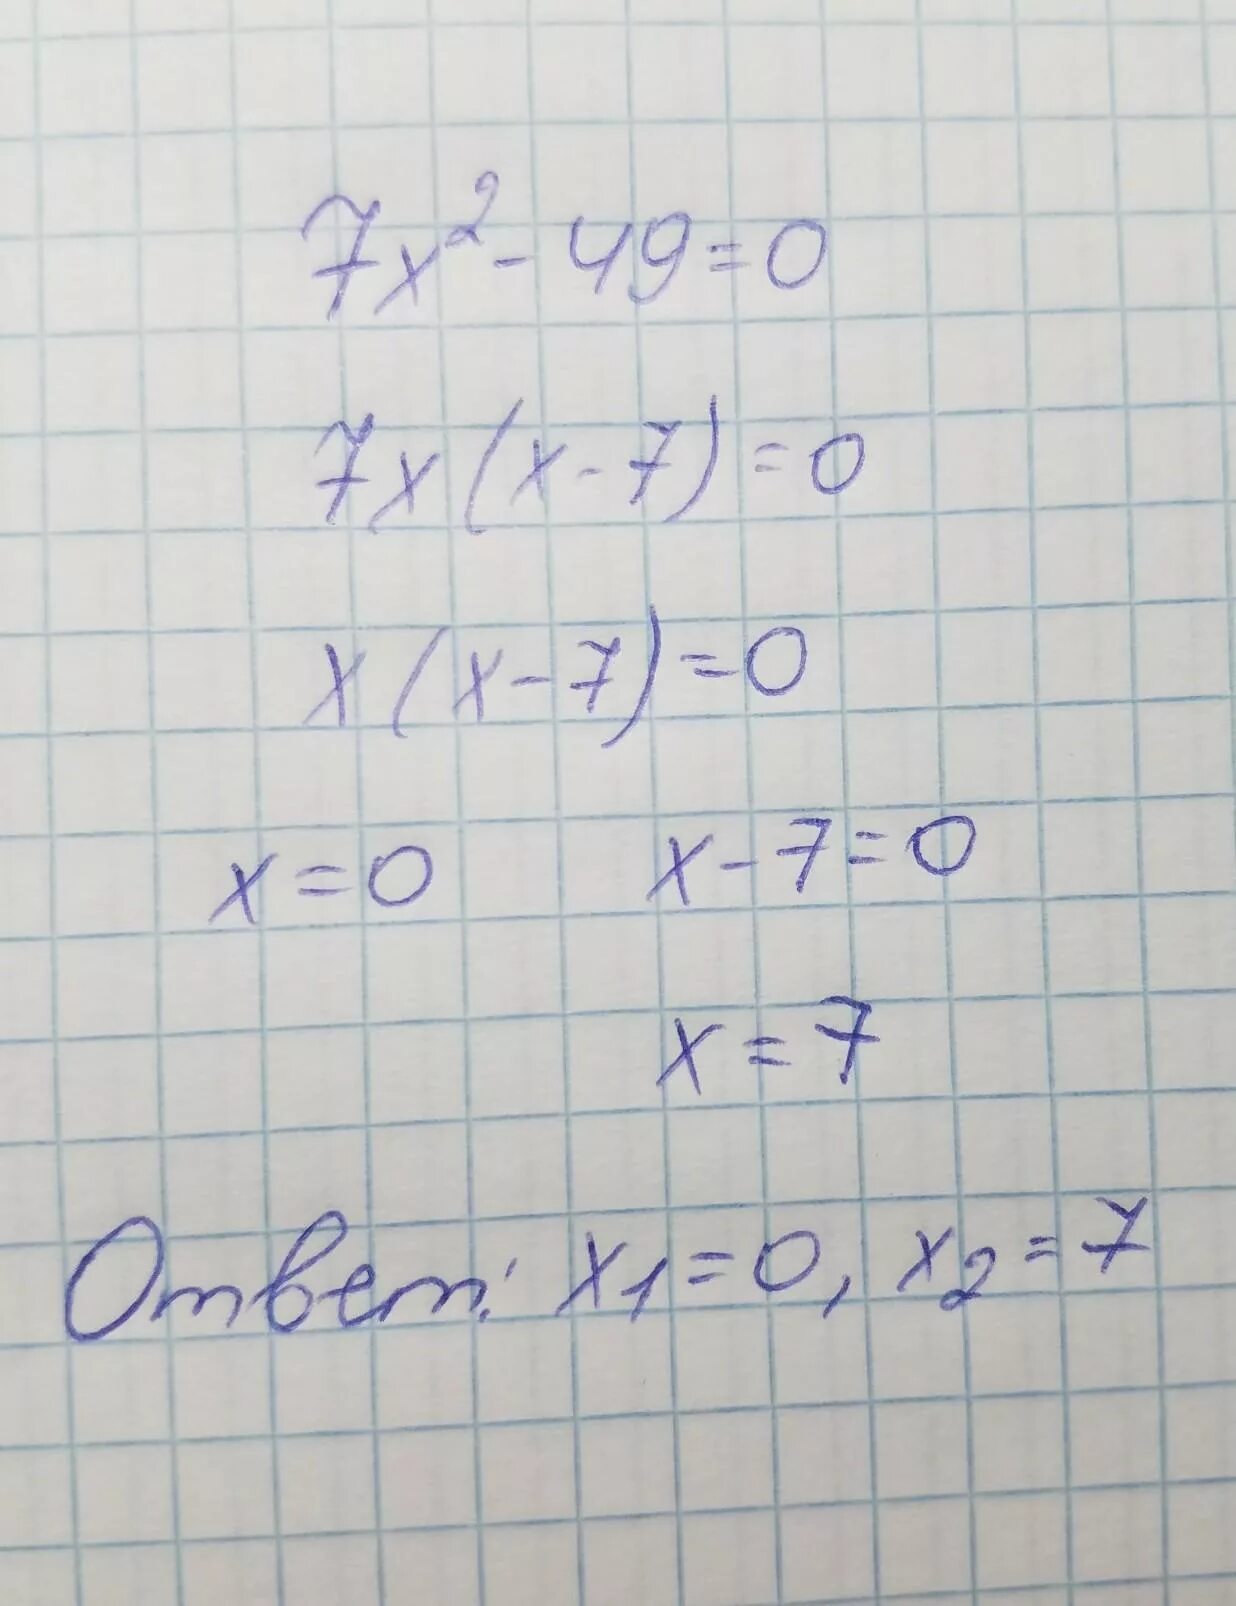 7 x 1 49 0. Х2-49 0. Х2 > 49. Найдите корень уравнения -7x-7=0. Х+7/х2-49 0.